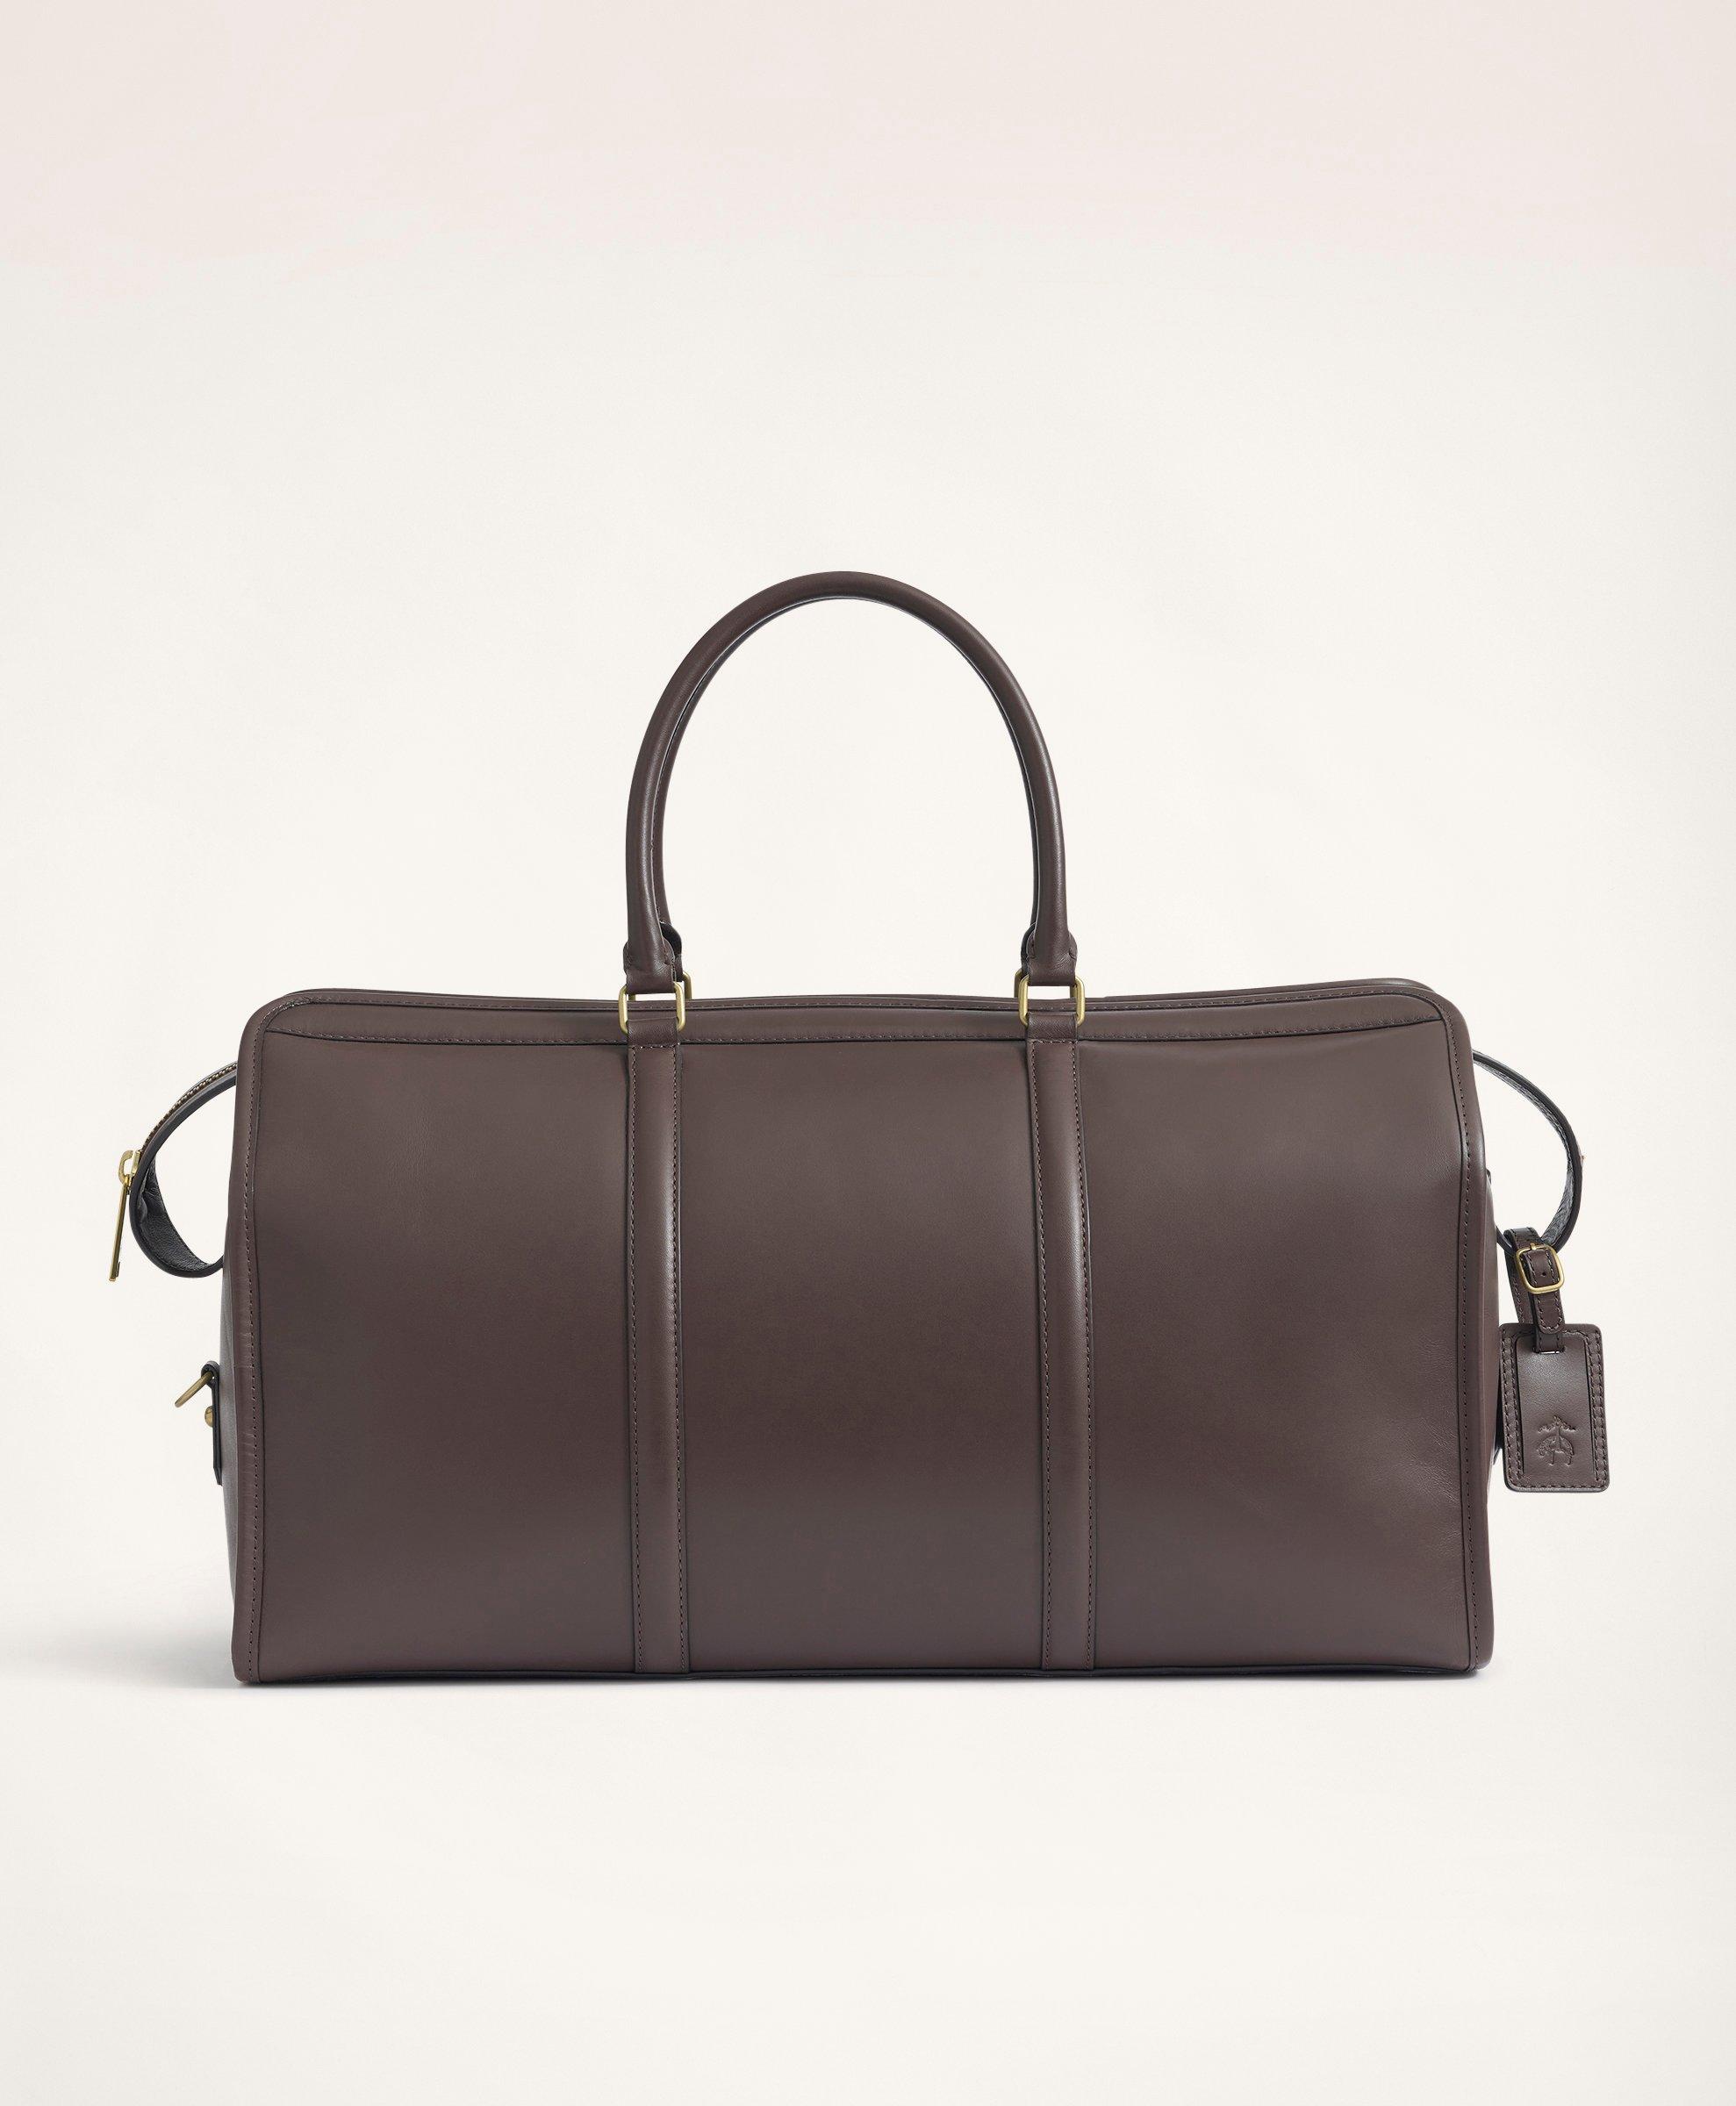 Leather Duffle Bag, image 1